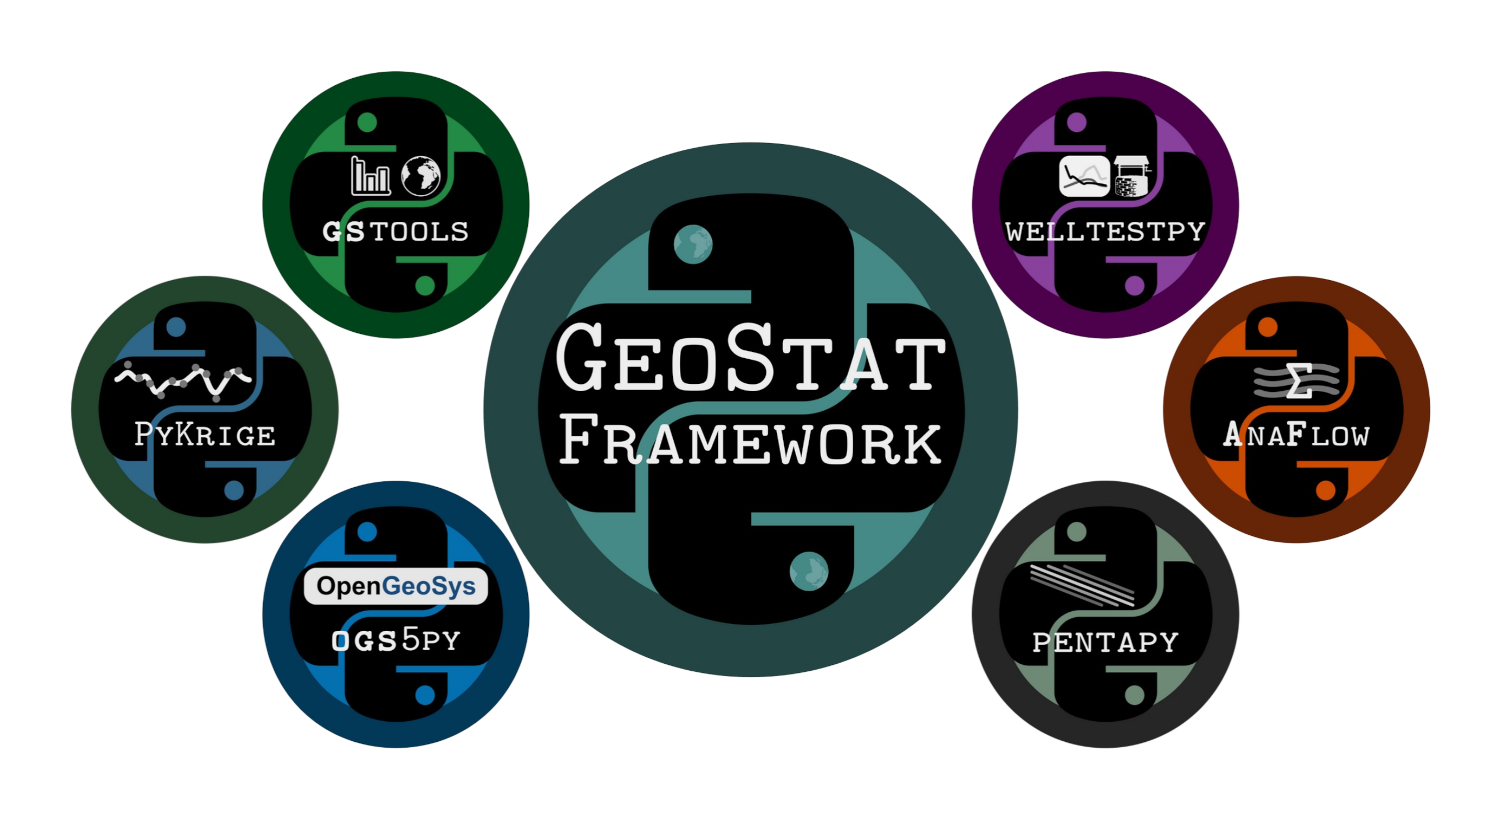 The GeoStat-Framework